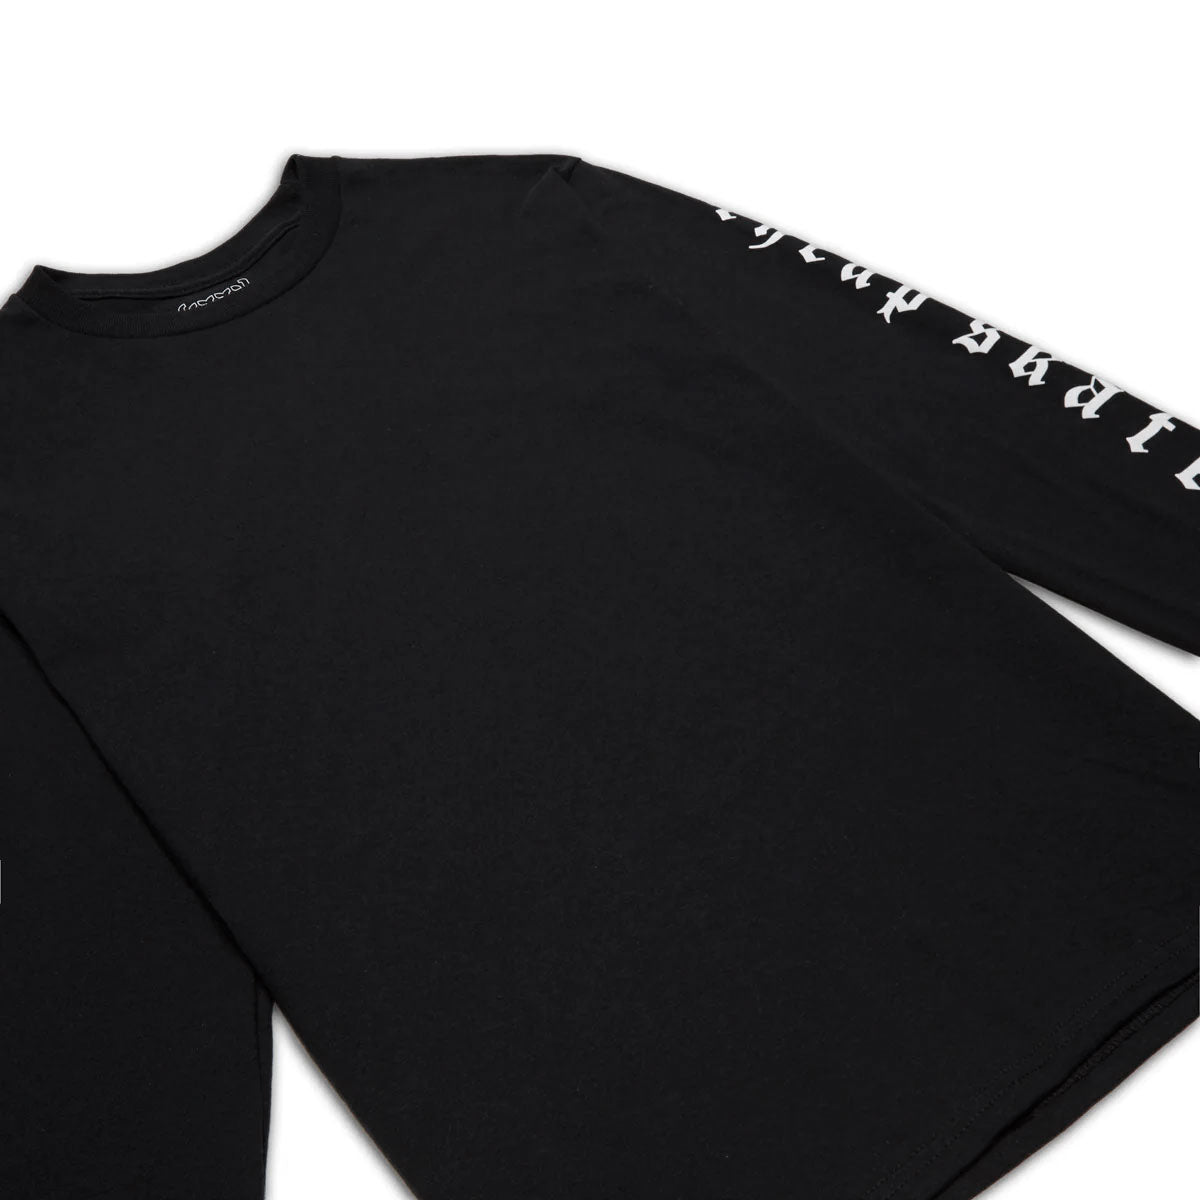 CCS Cheap Skates OE Long Sleeve T-Shirt - Black/White image 3